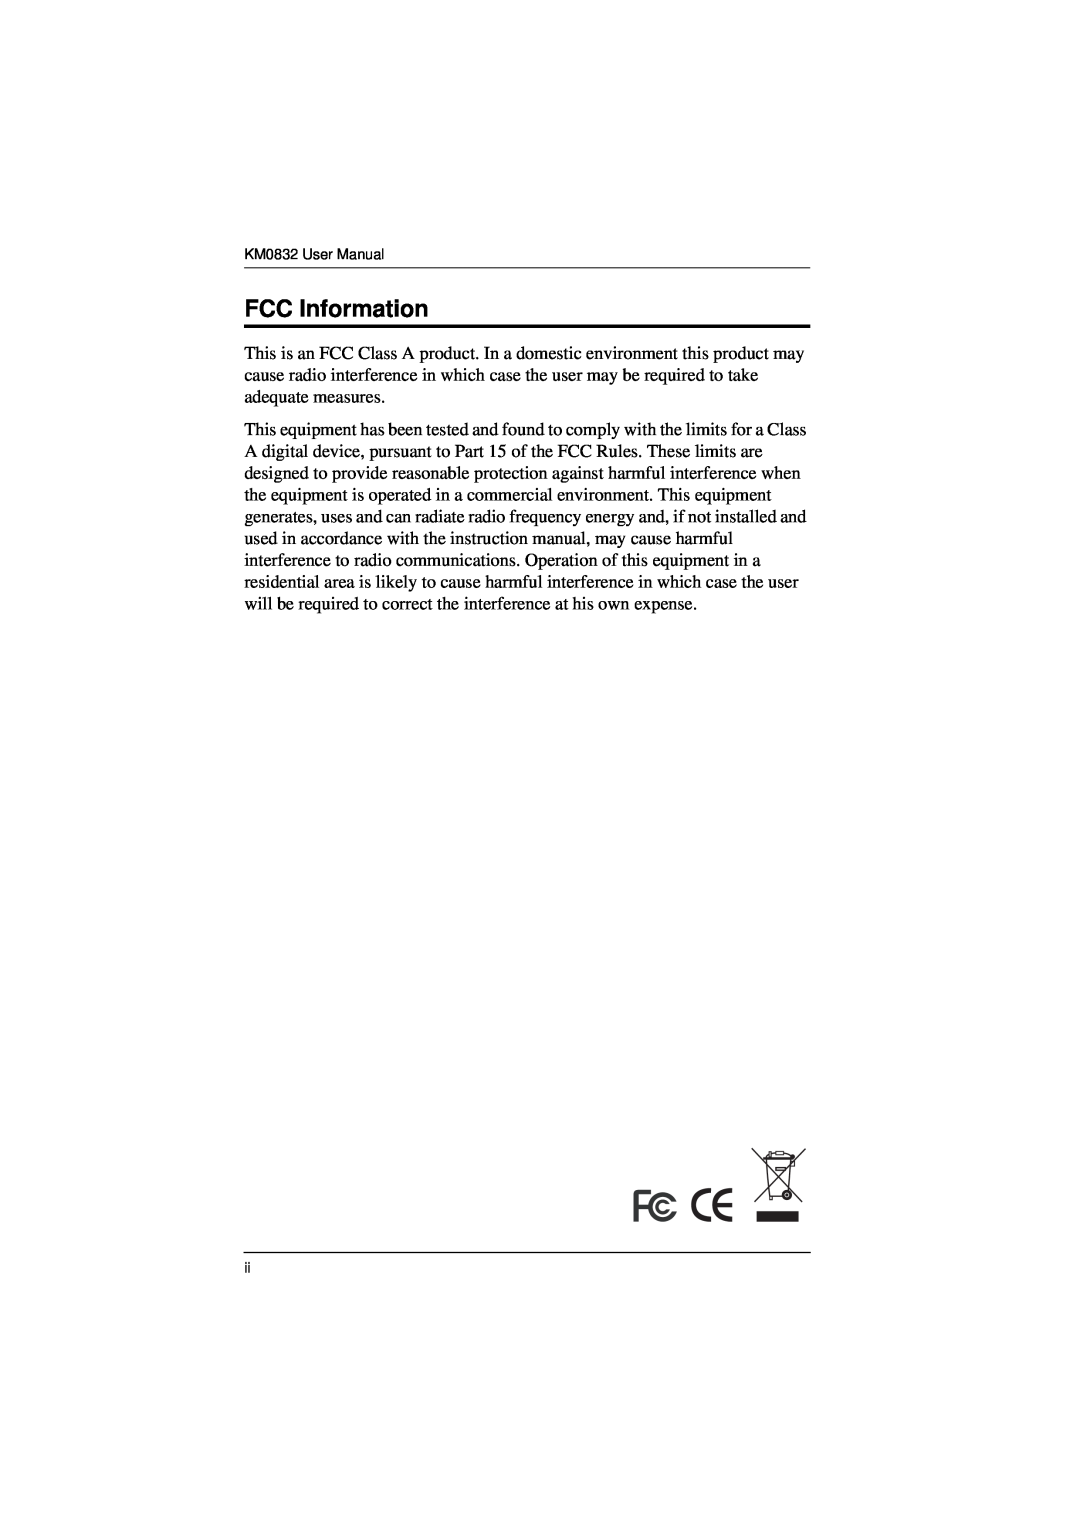 ATEN Technology user manual FCC Information, KM0832 User Manual 